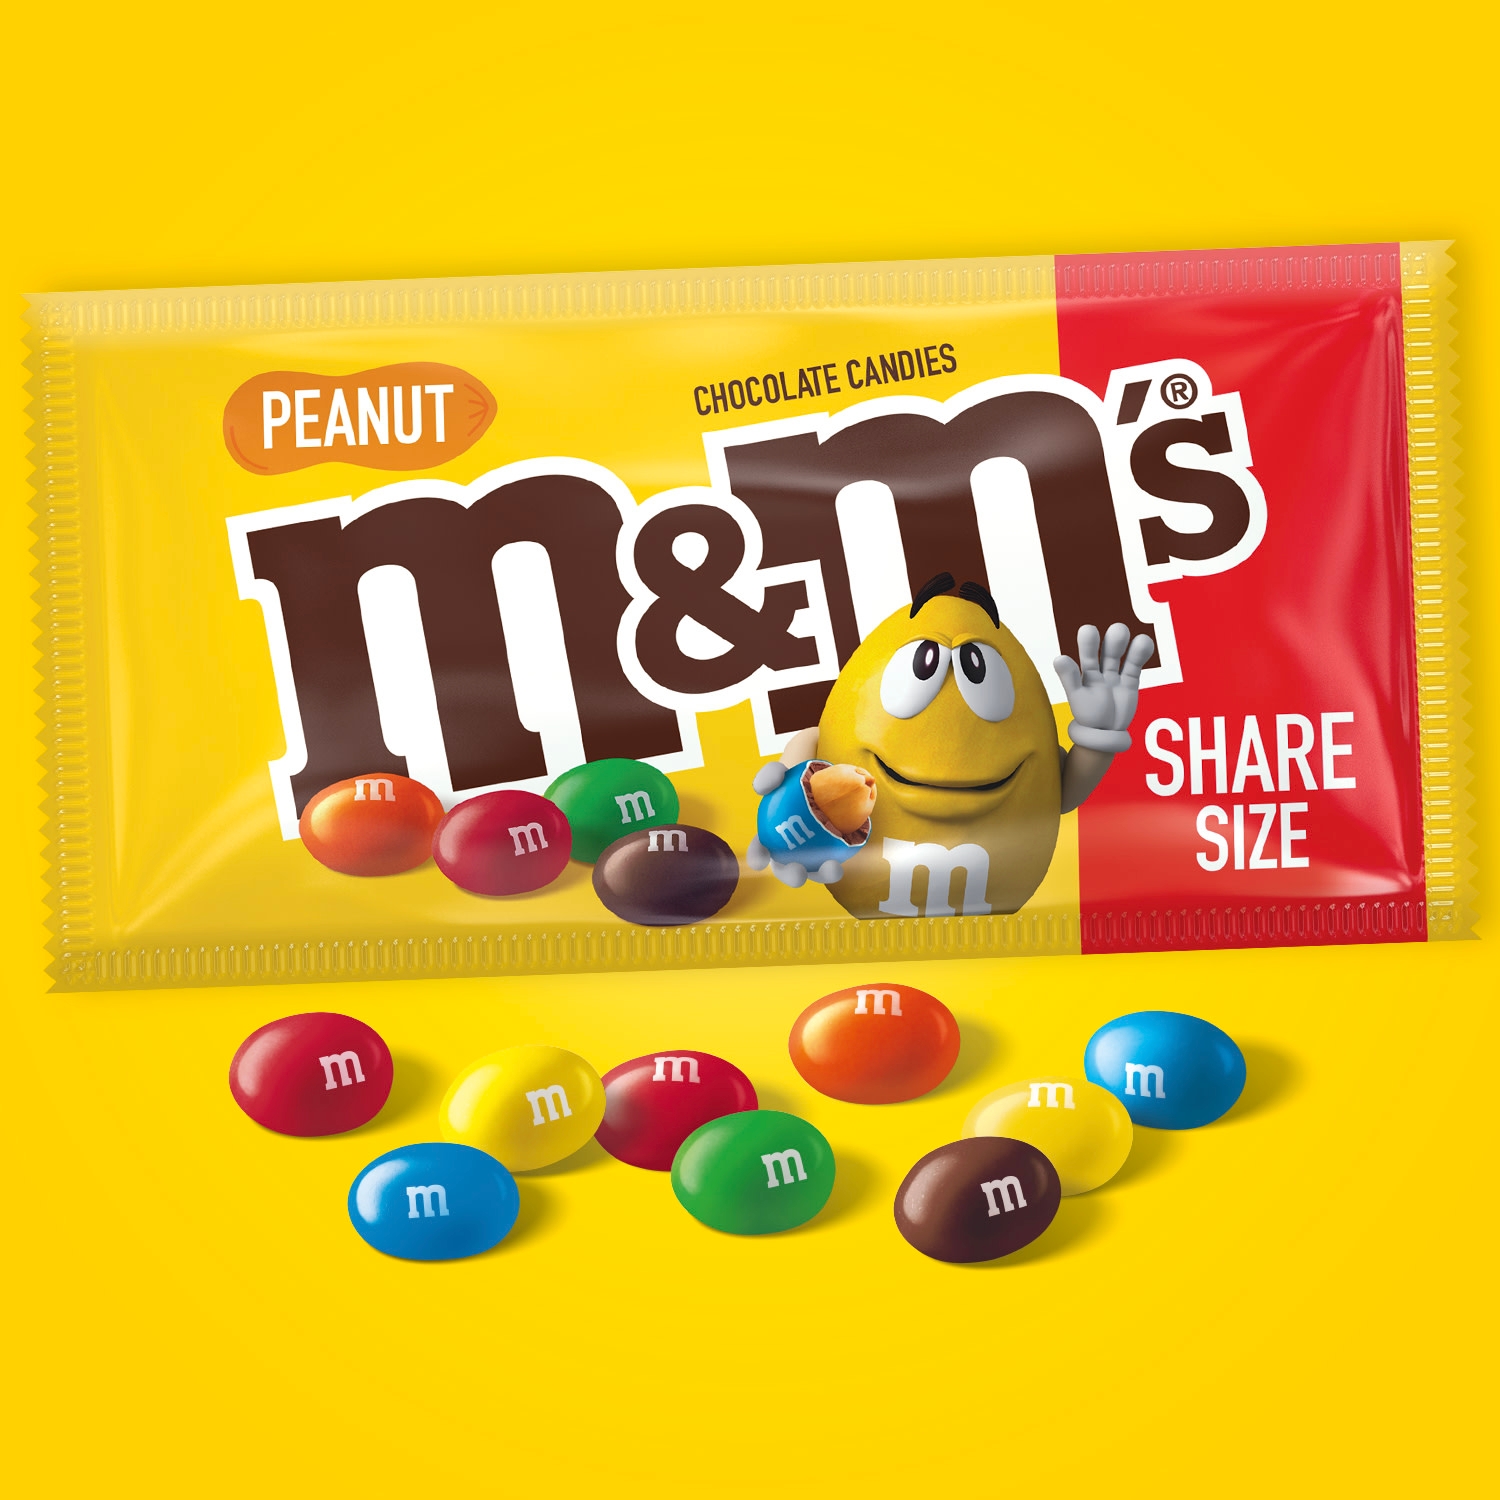 M&M's Fun Size Peanut Milk Chocolate Candy - 10.57 oz Bag